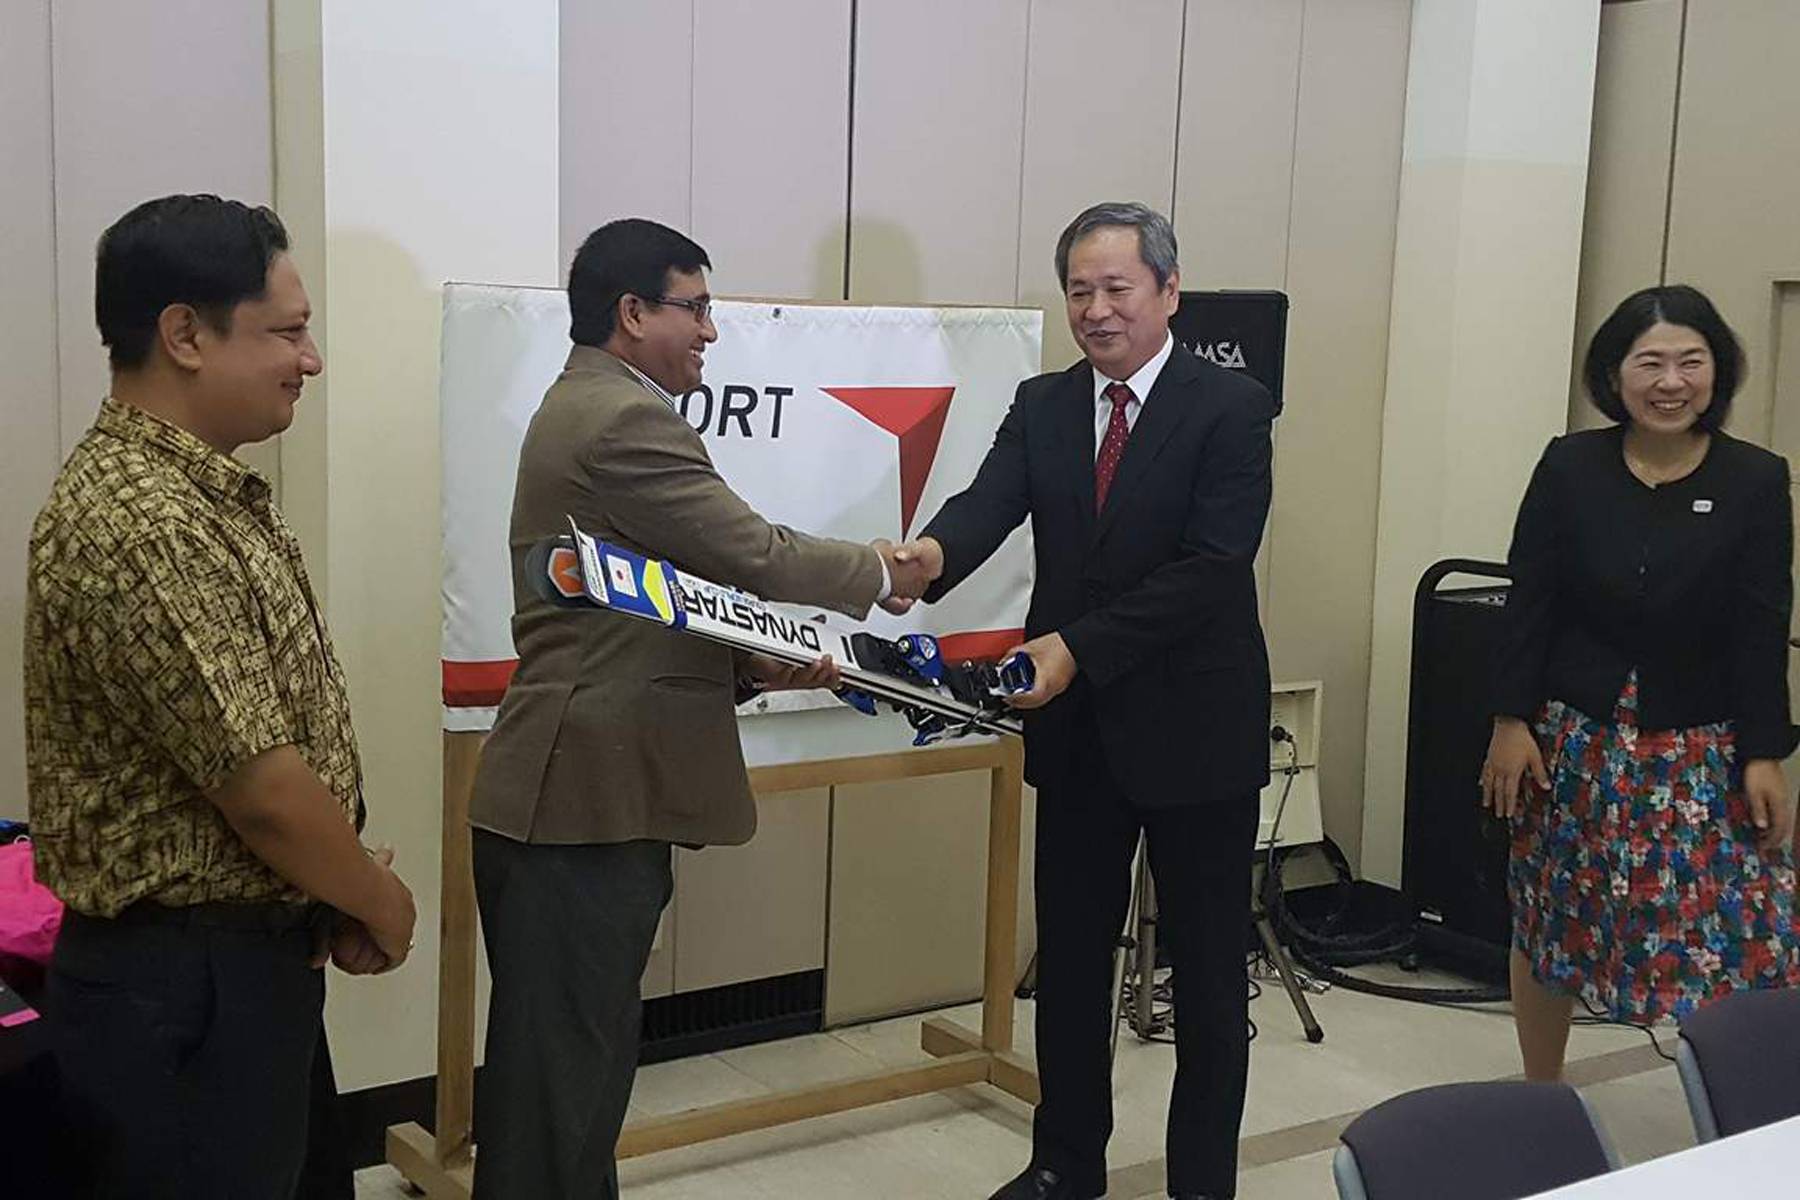 Japanese envoy distributes sports materials